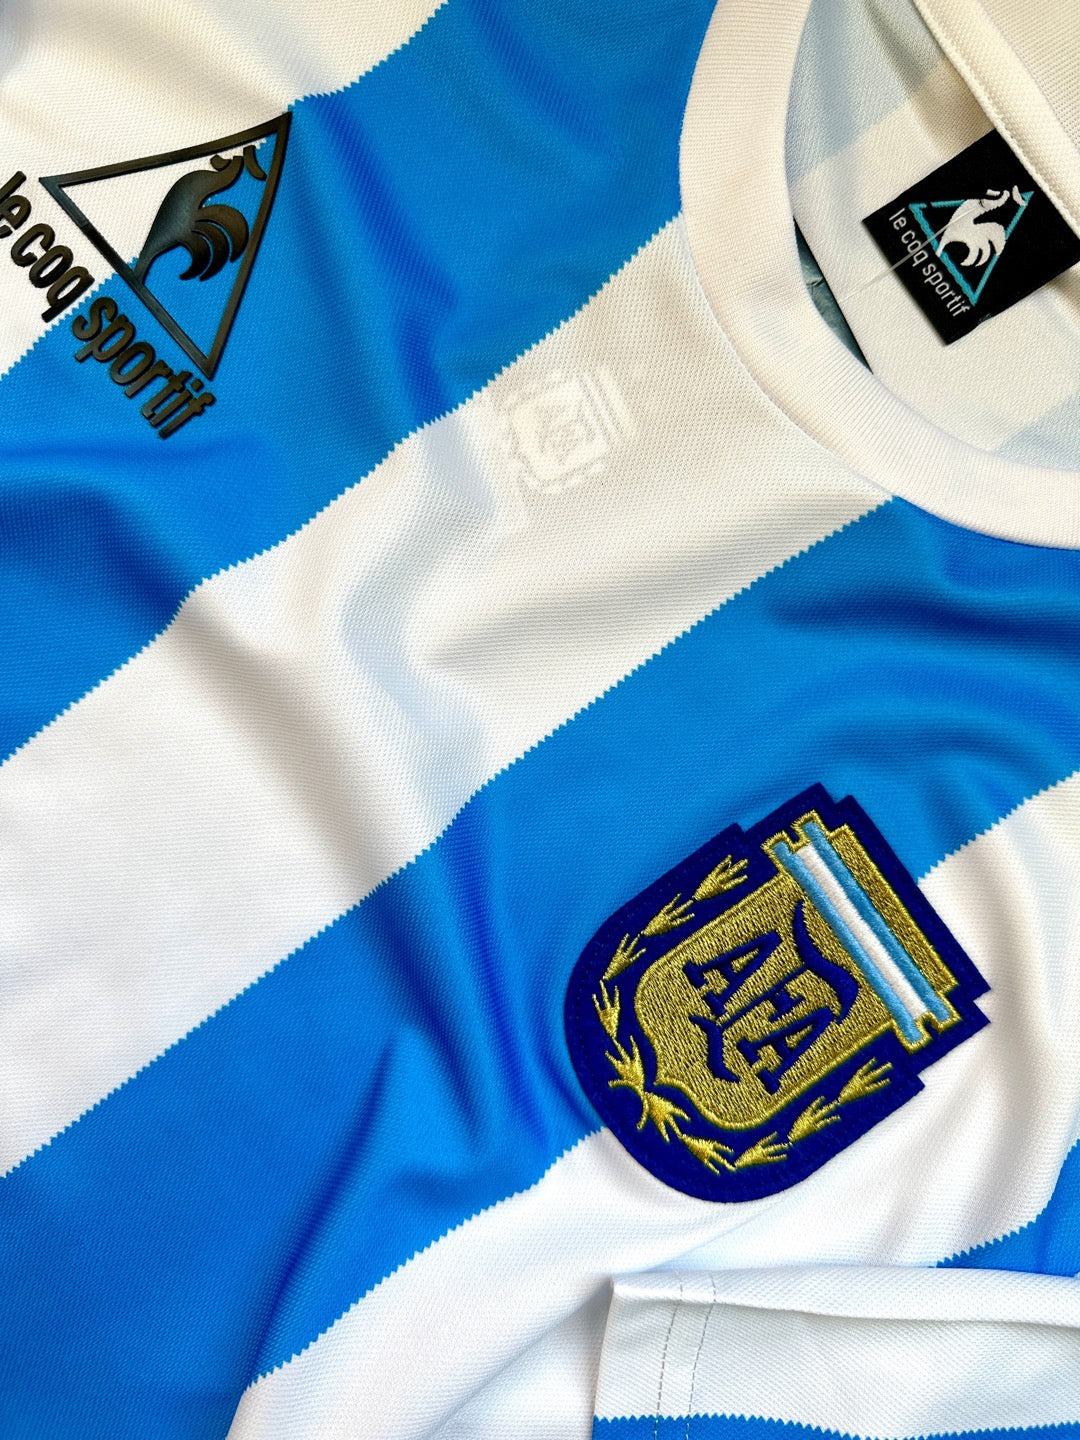 jersey argentina 1986 local Maradona detalle